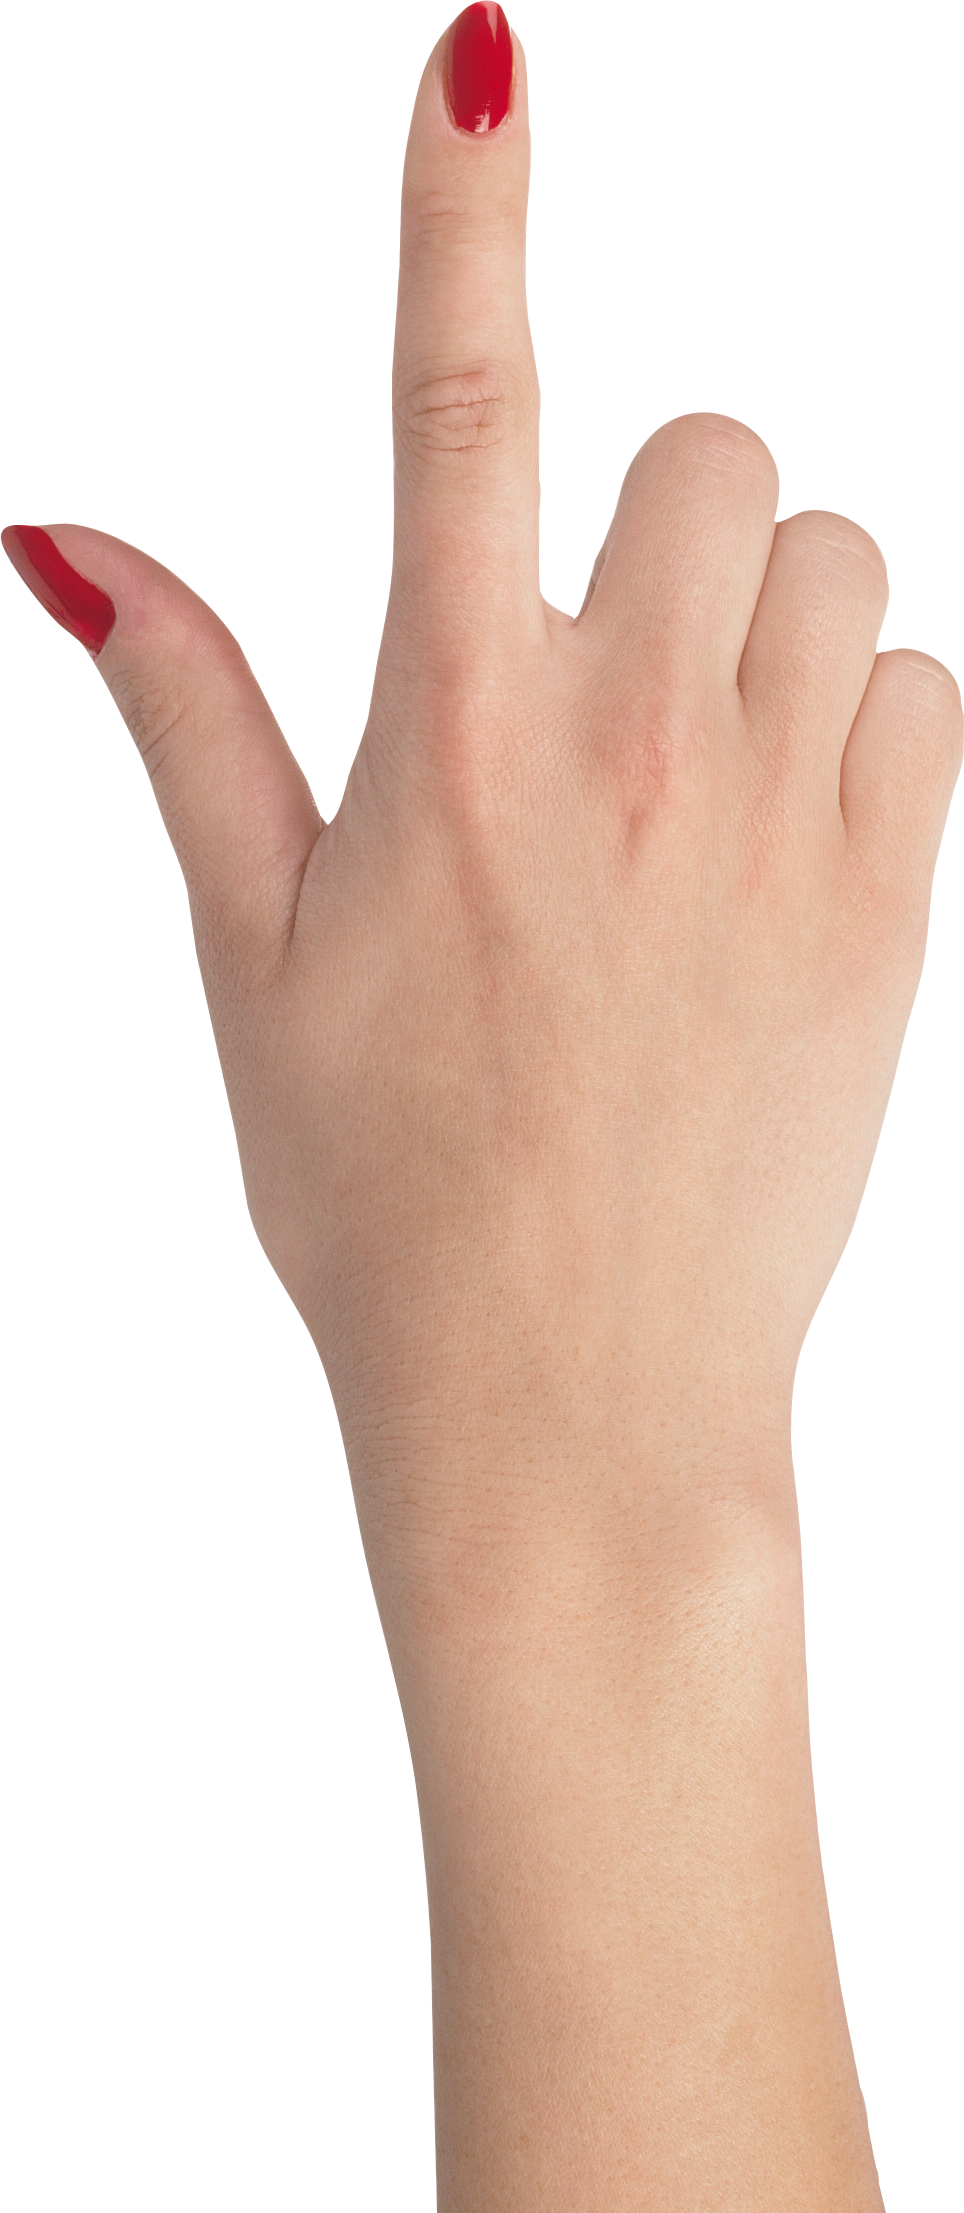 Manicure Clipart Woman S Hand Picture Manicure Clipart Woman